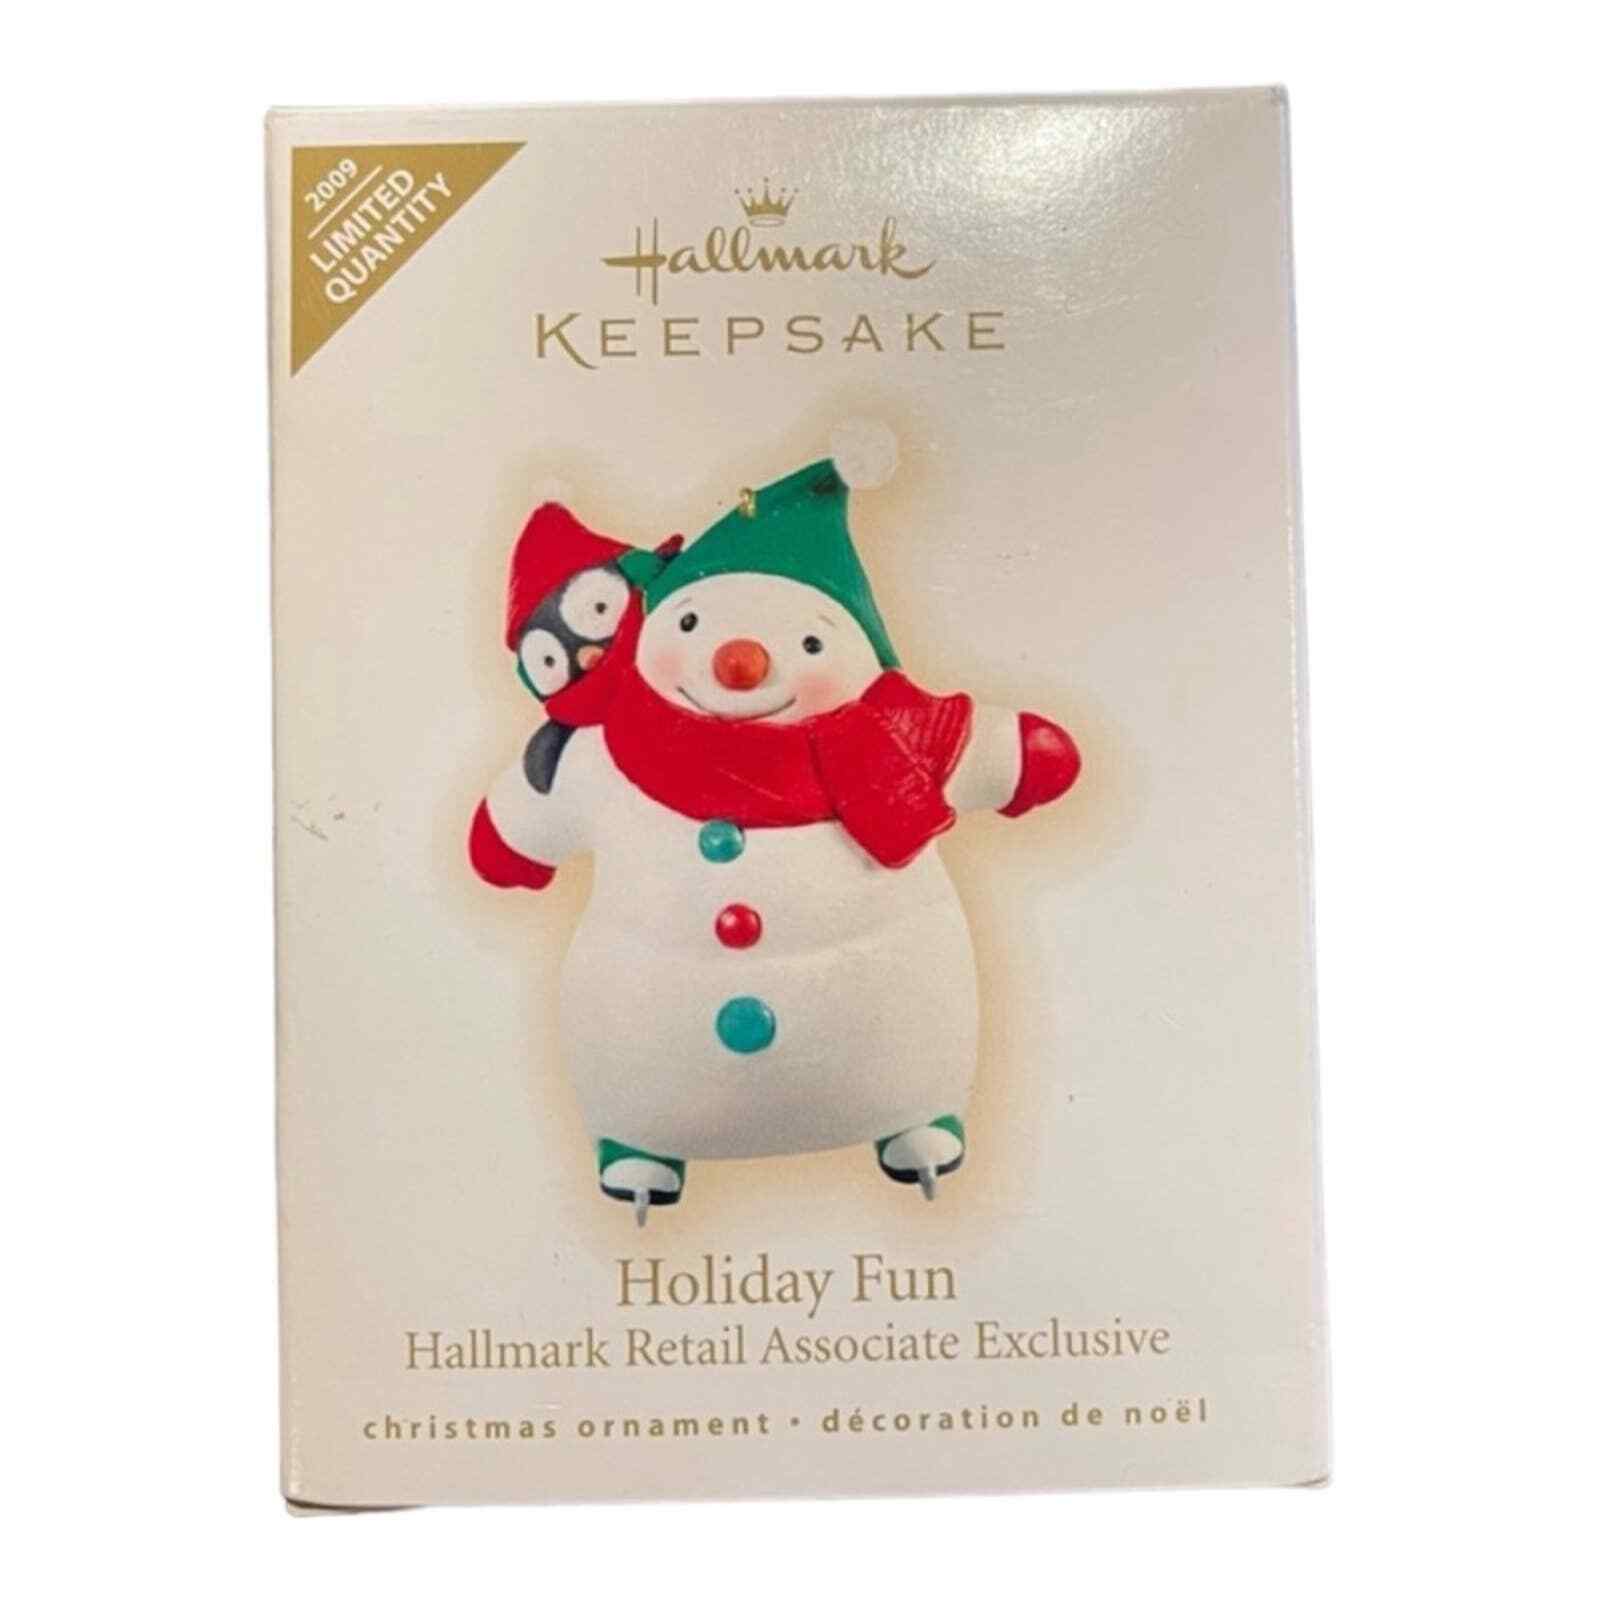 Hallmark Keepsake Ornament 2009 Retail Associate Exclusive Holiday Fun Limited